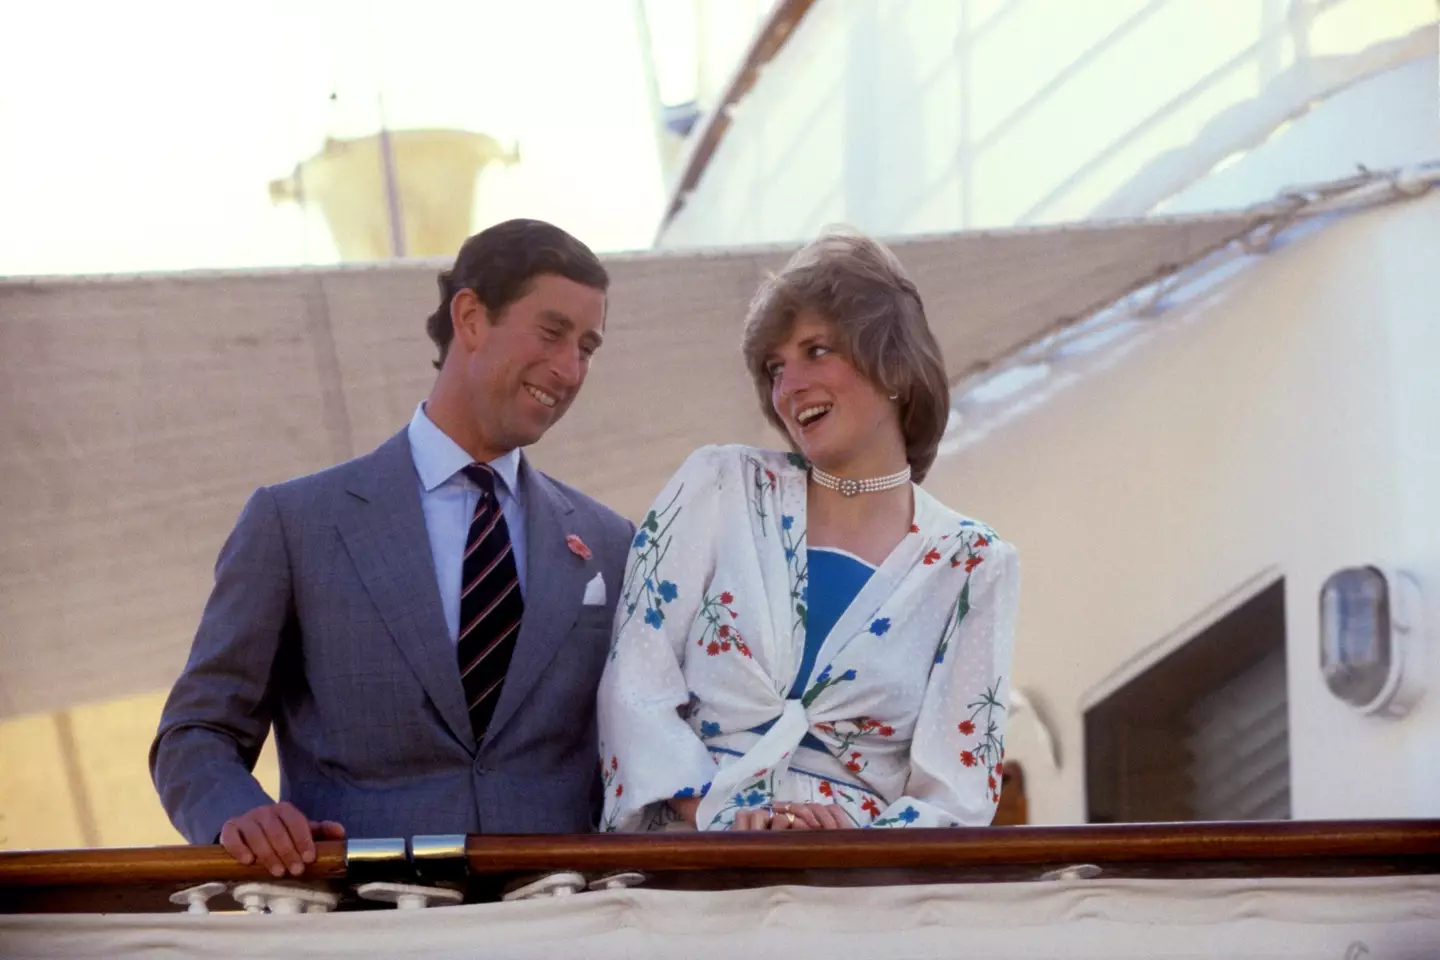 Princess Diana and the now King Charles III on their honeymoon.